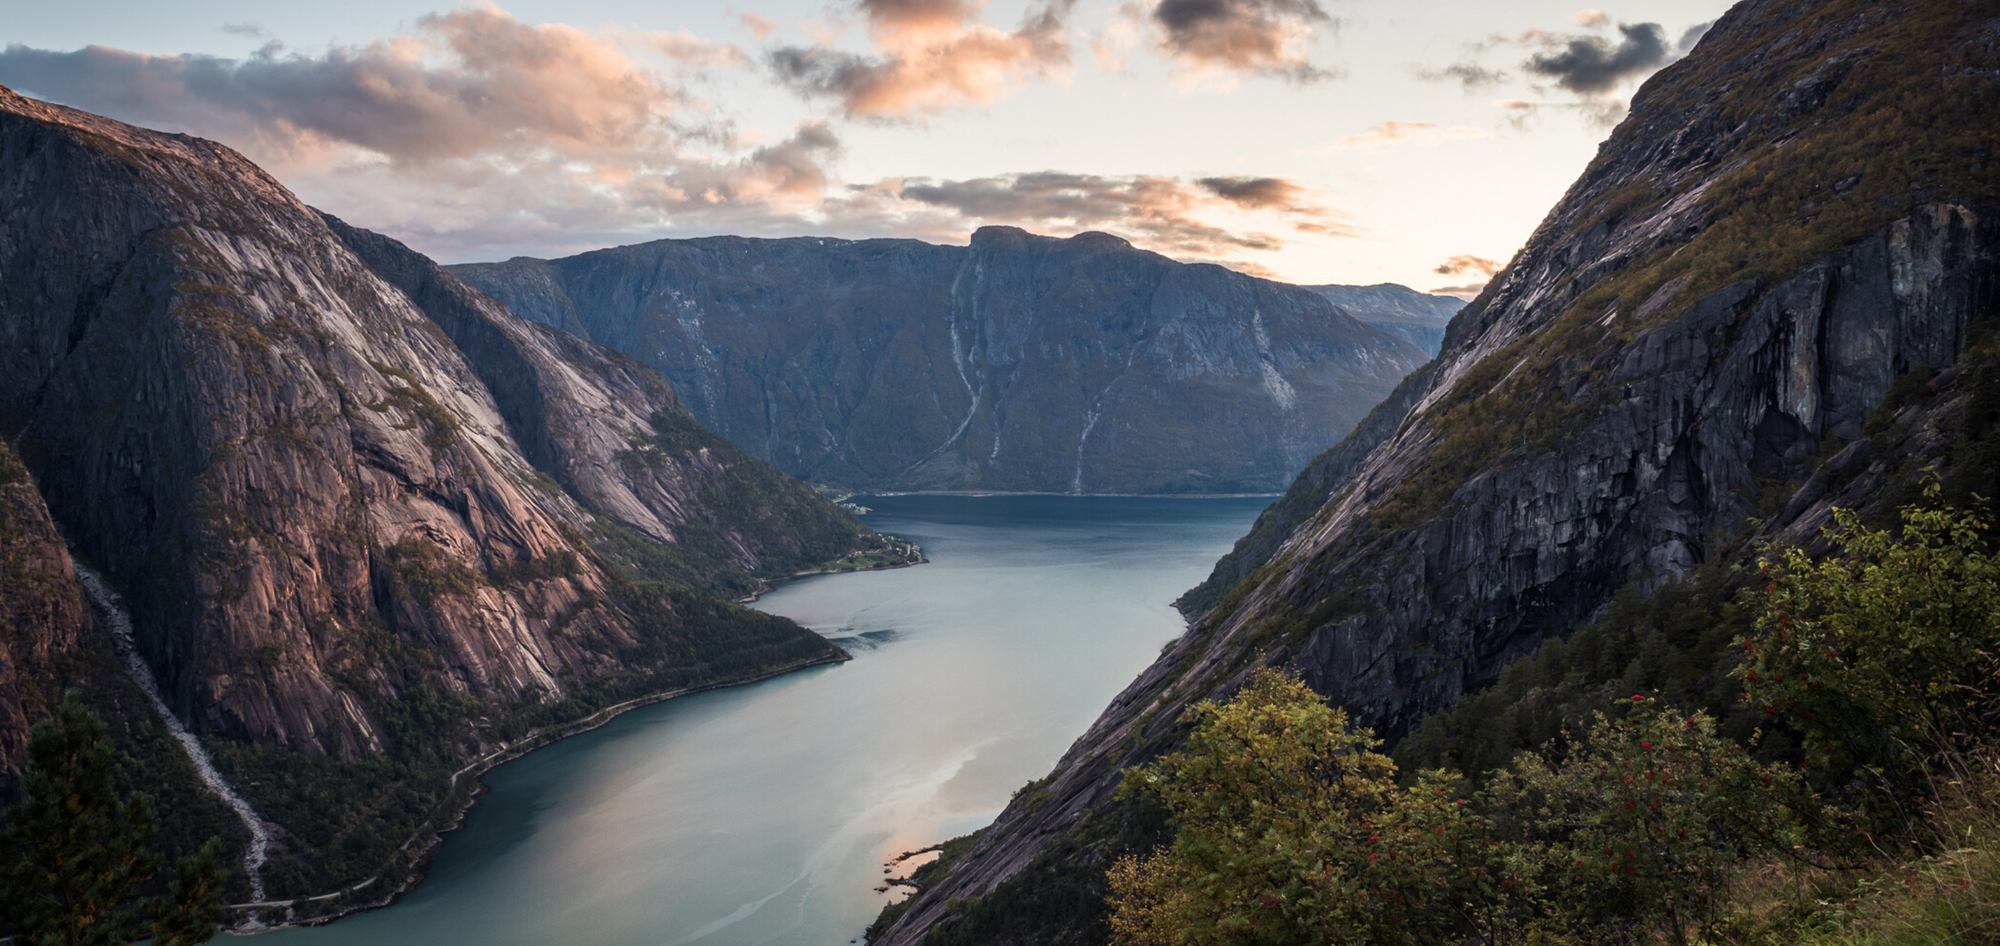 Norway's best Photo locations